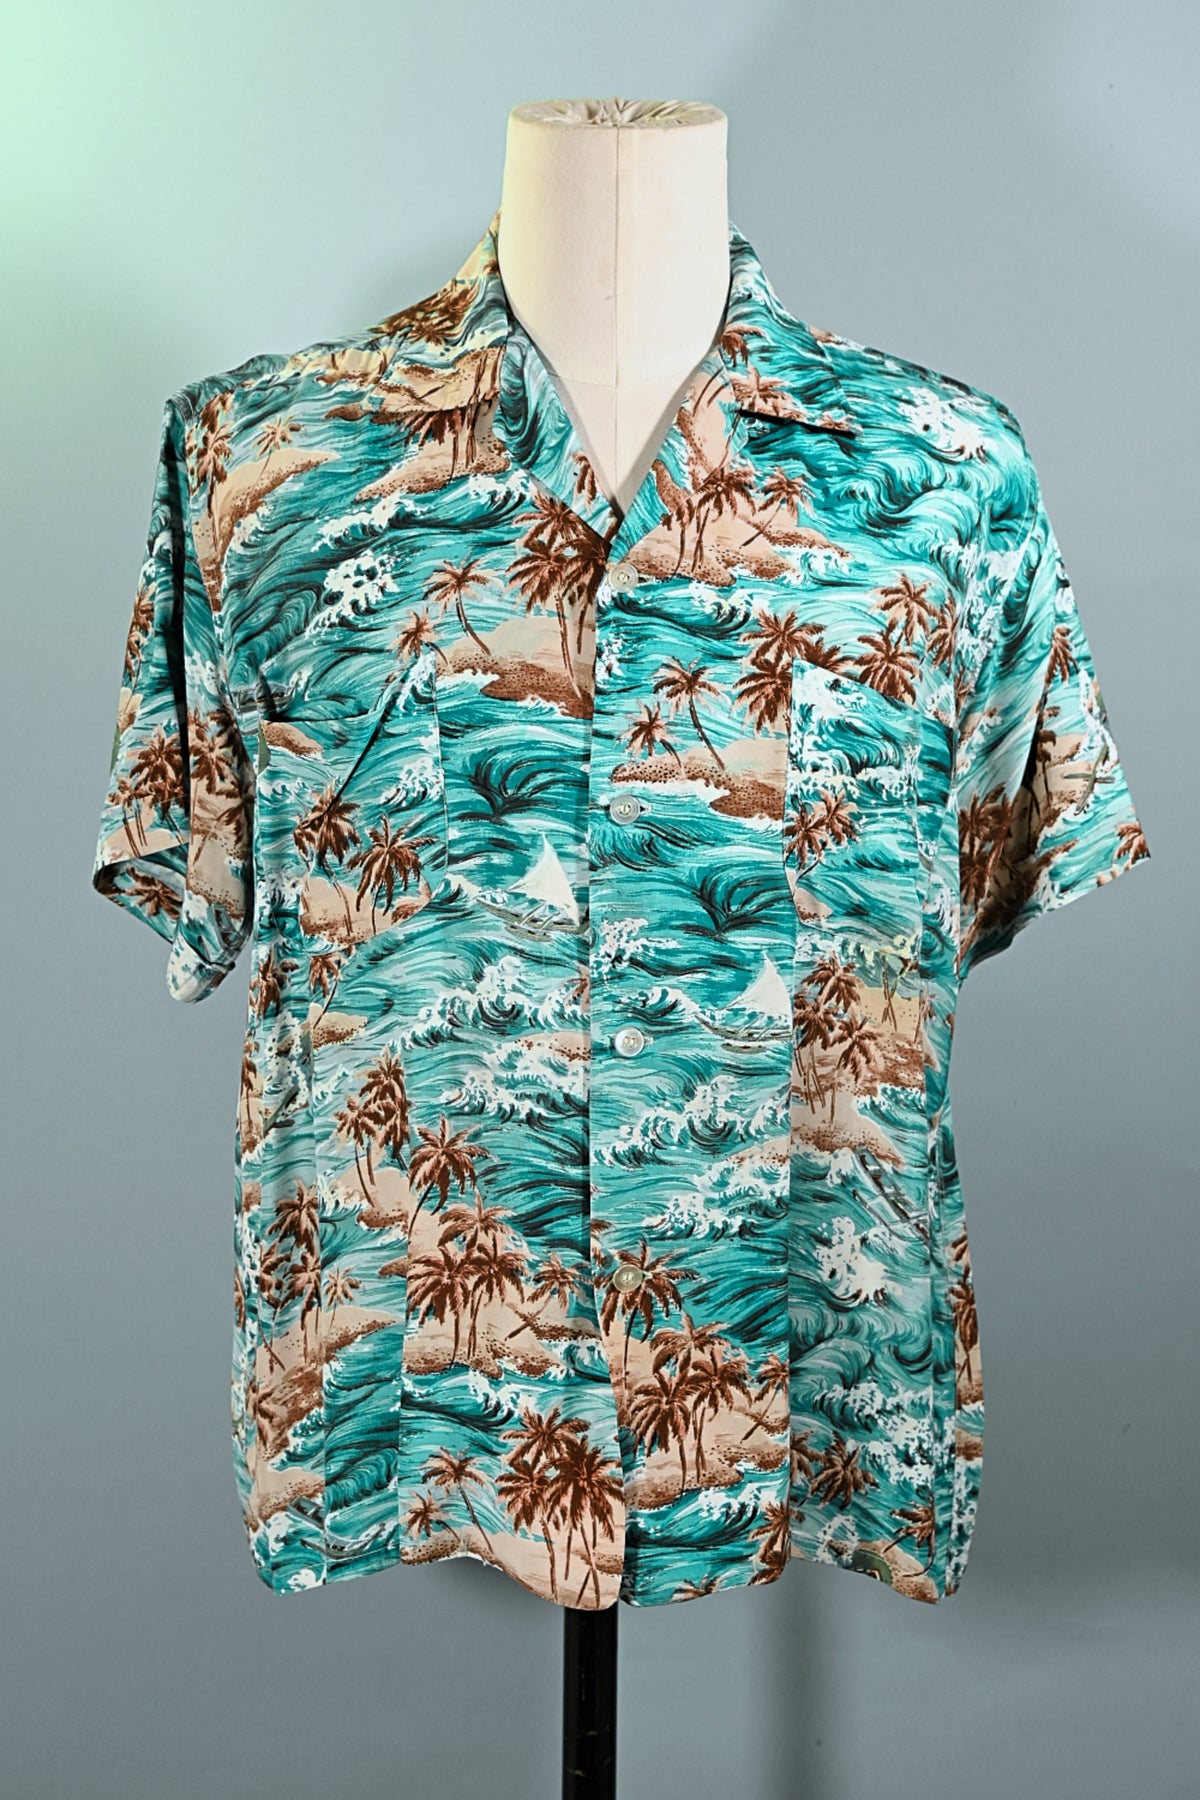 SOLD Penny's Vintage 50s Rayon Hawaiian Shirt, Made in Japan